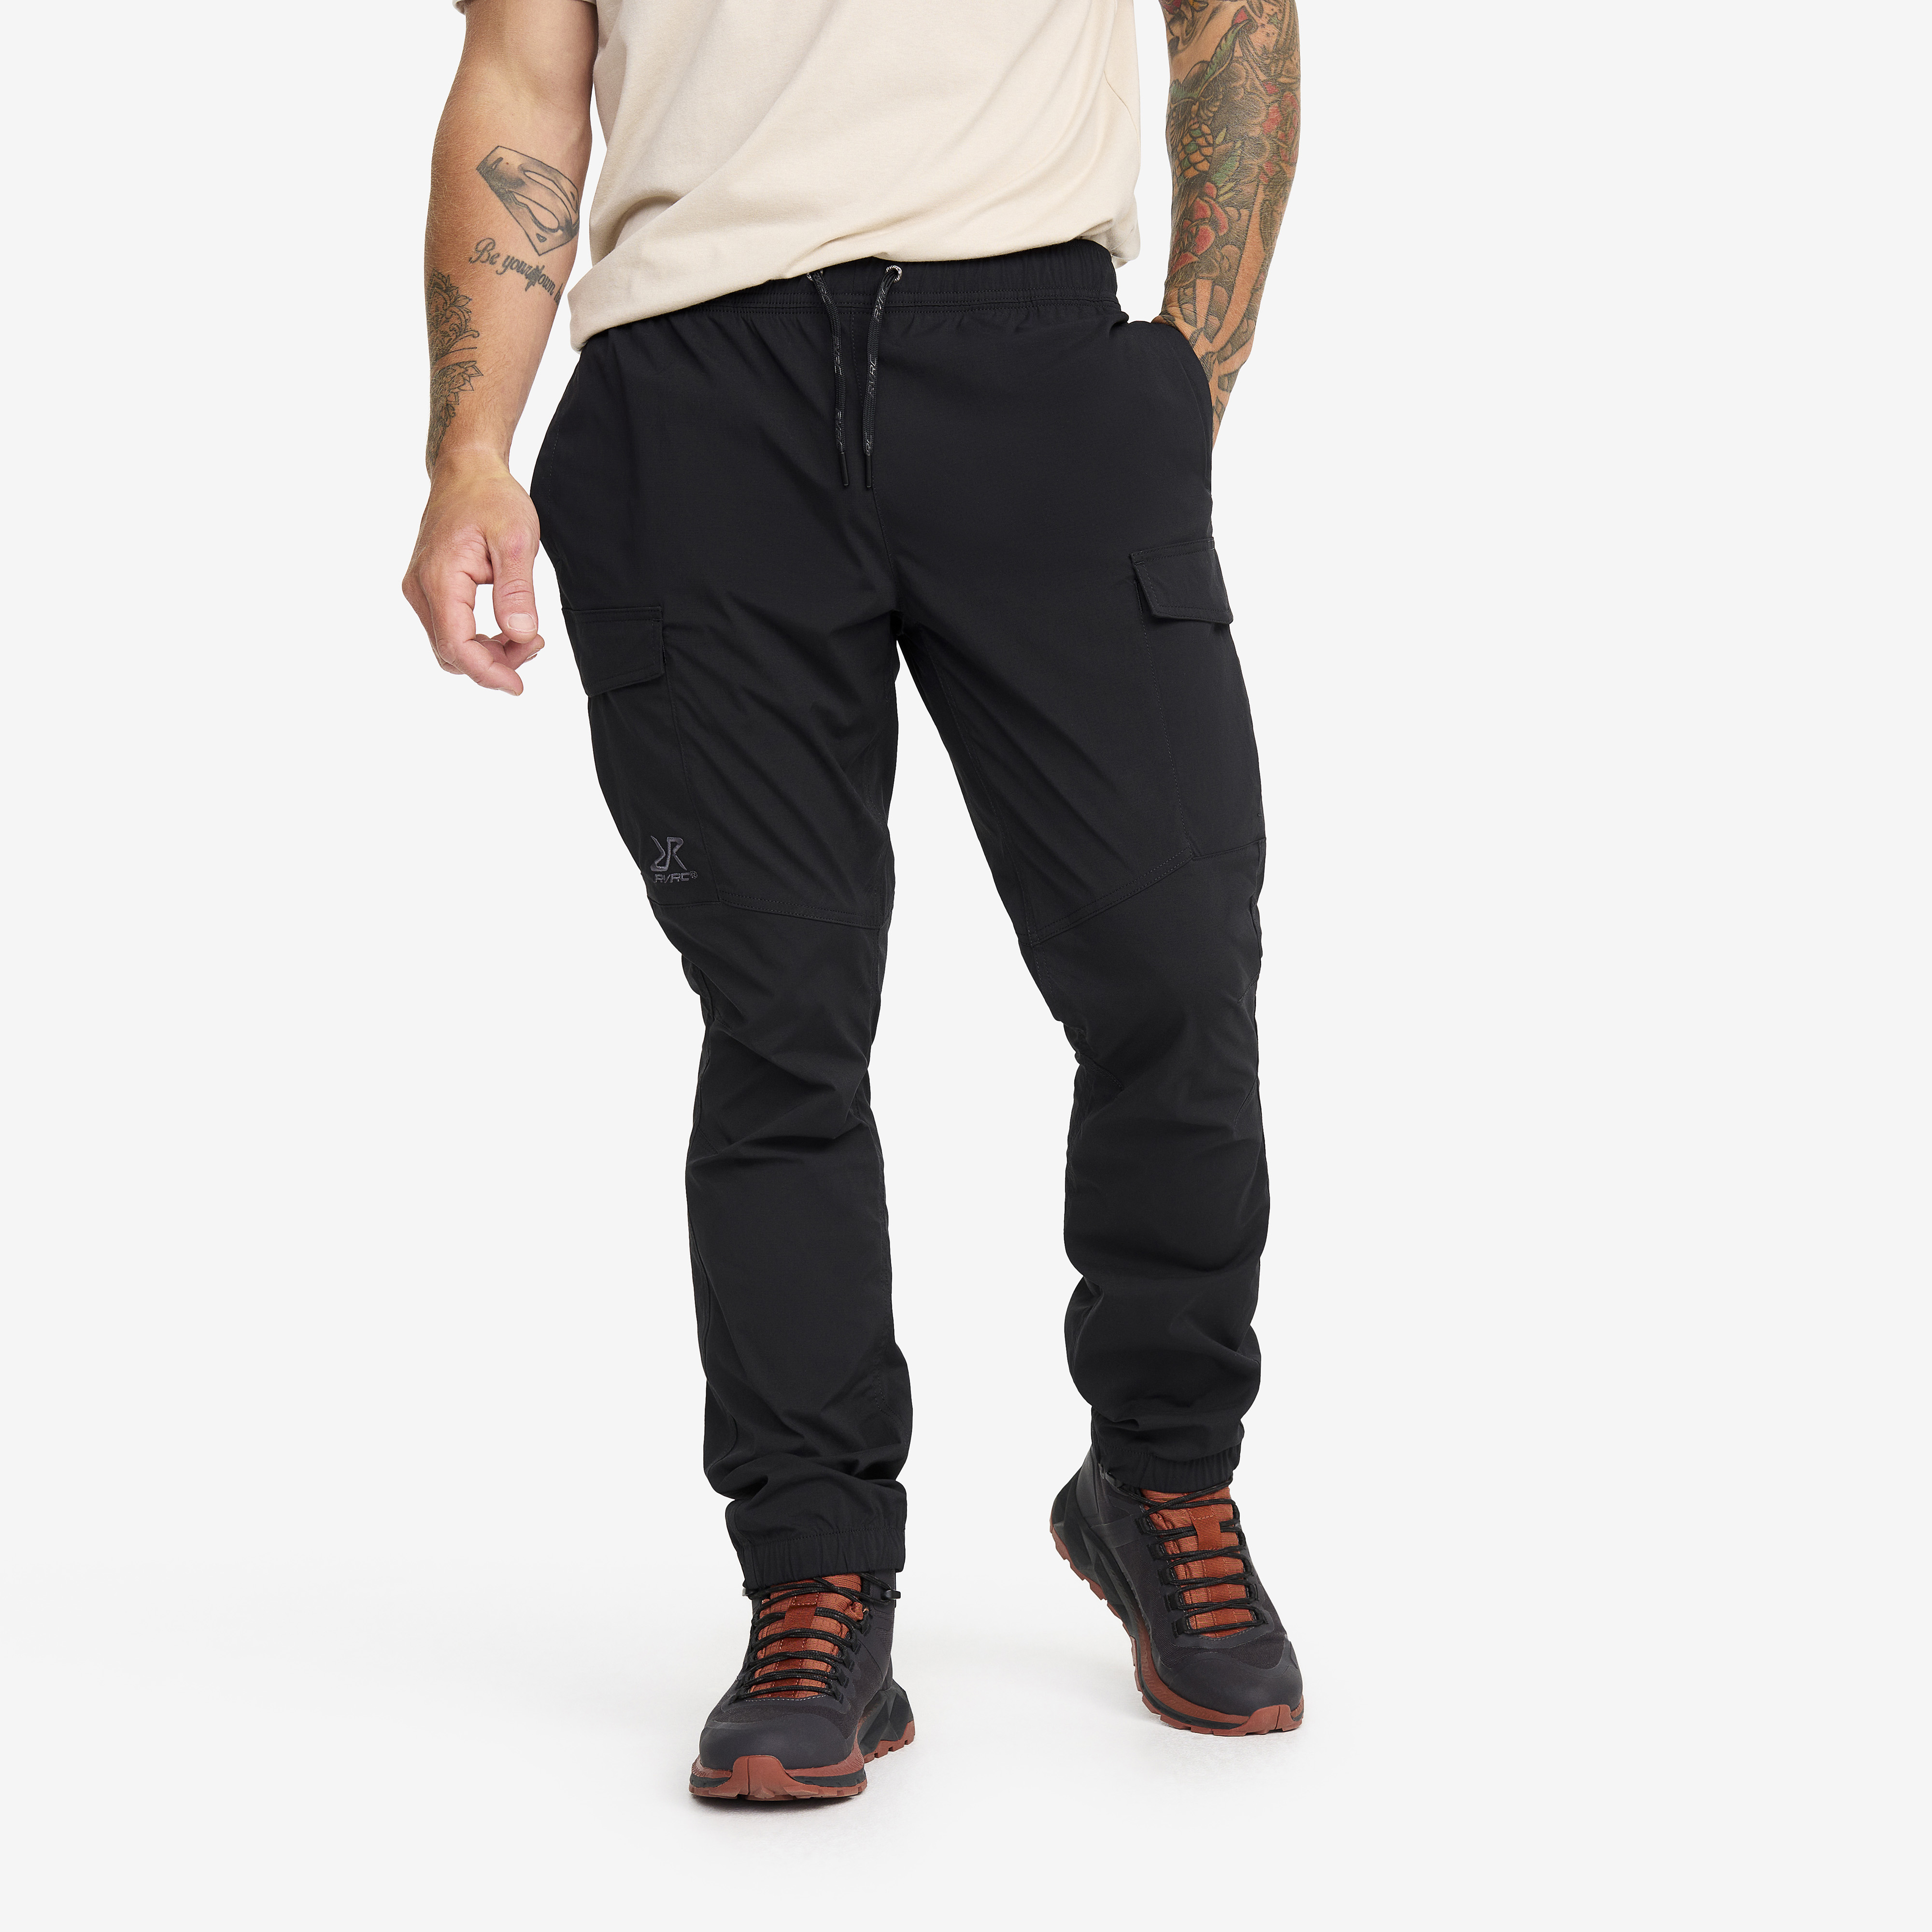 8 Cargo & Jogger Pants ideas  jogger pants, mens outfits, men casual